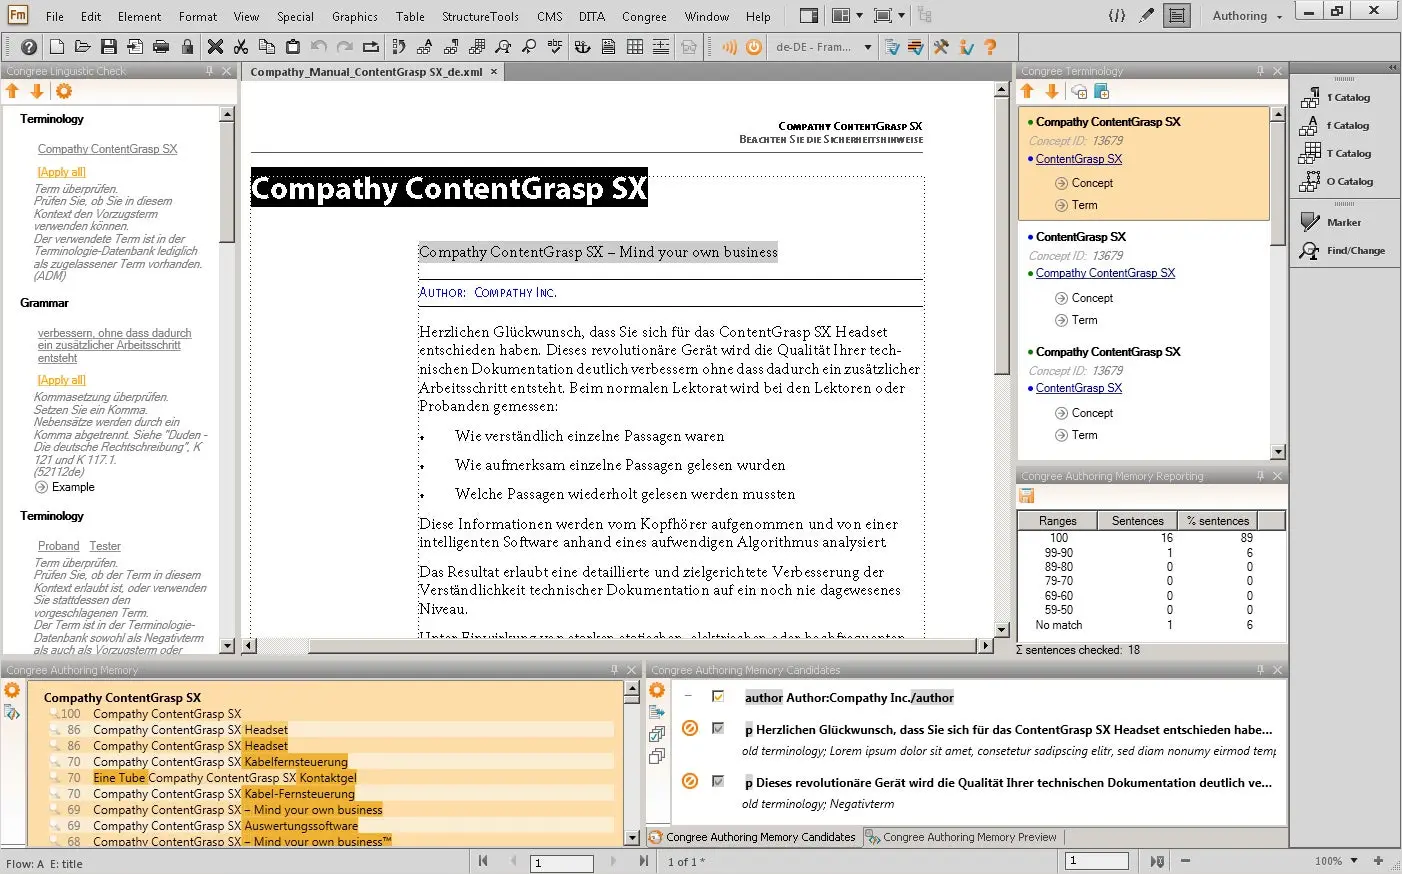 Congree and Adobe FrameMaker Integration